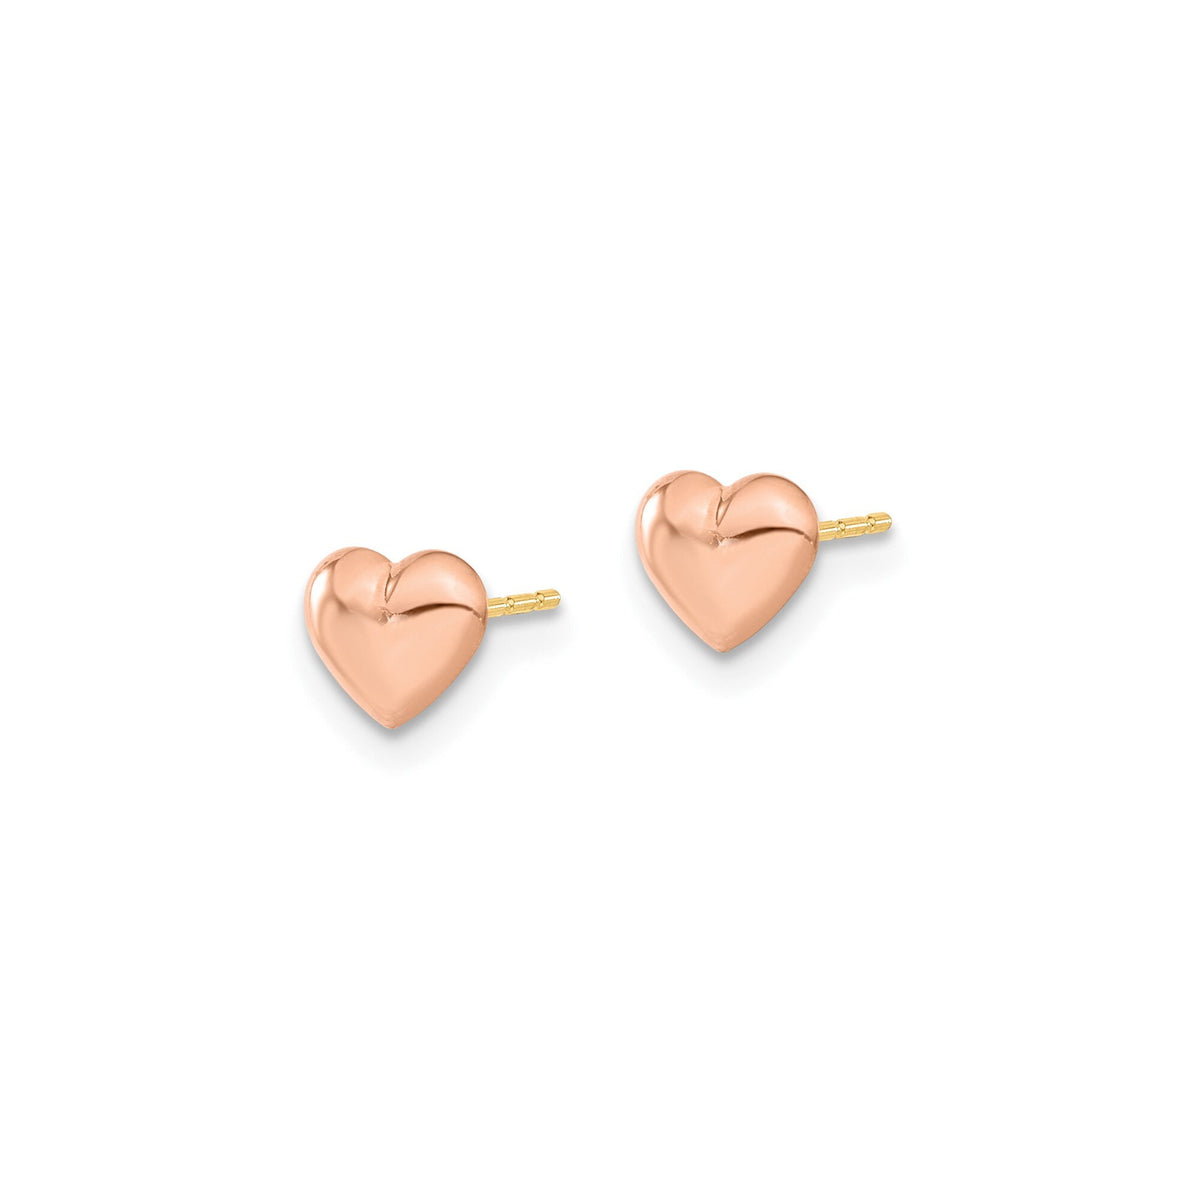 14k Rose Gold Baby / Toddler Heart Earrings 6x7mm Gift Box Included Made in USA Children Heart Earrings